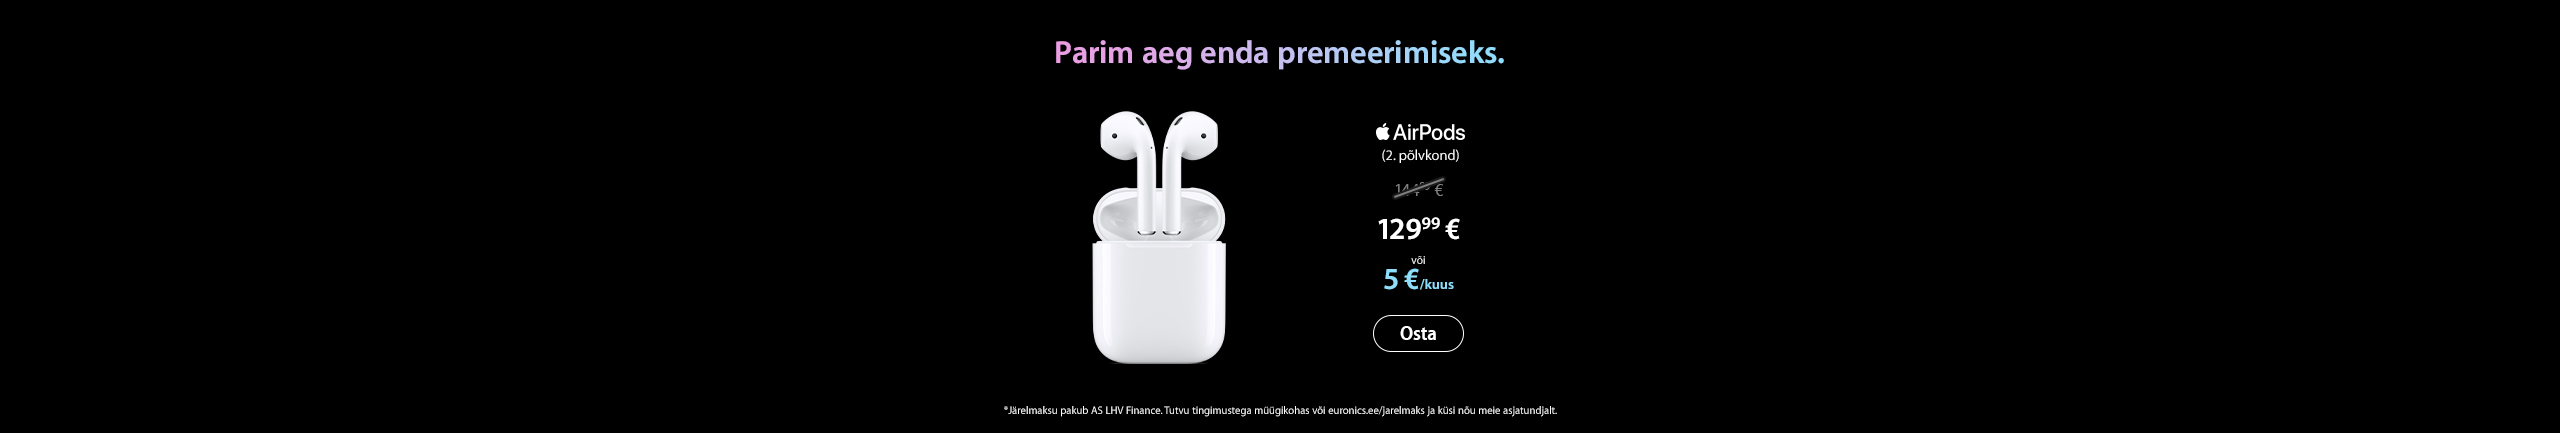 Apple'i Musta Reede pakkumised - AirPods 2